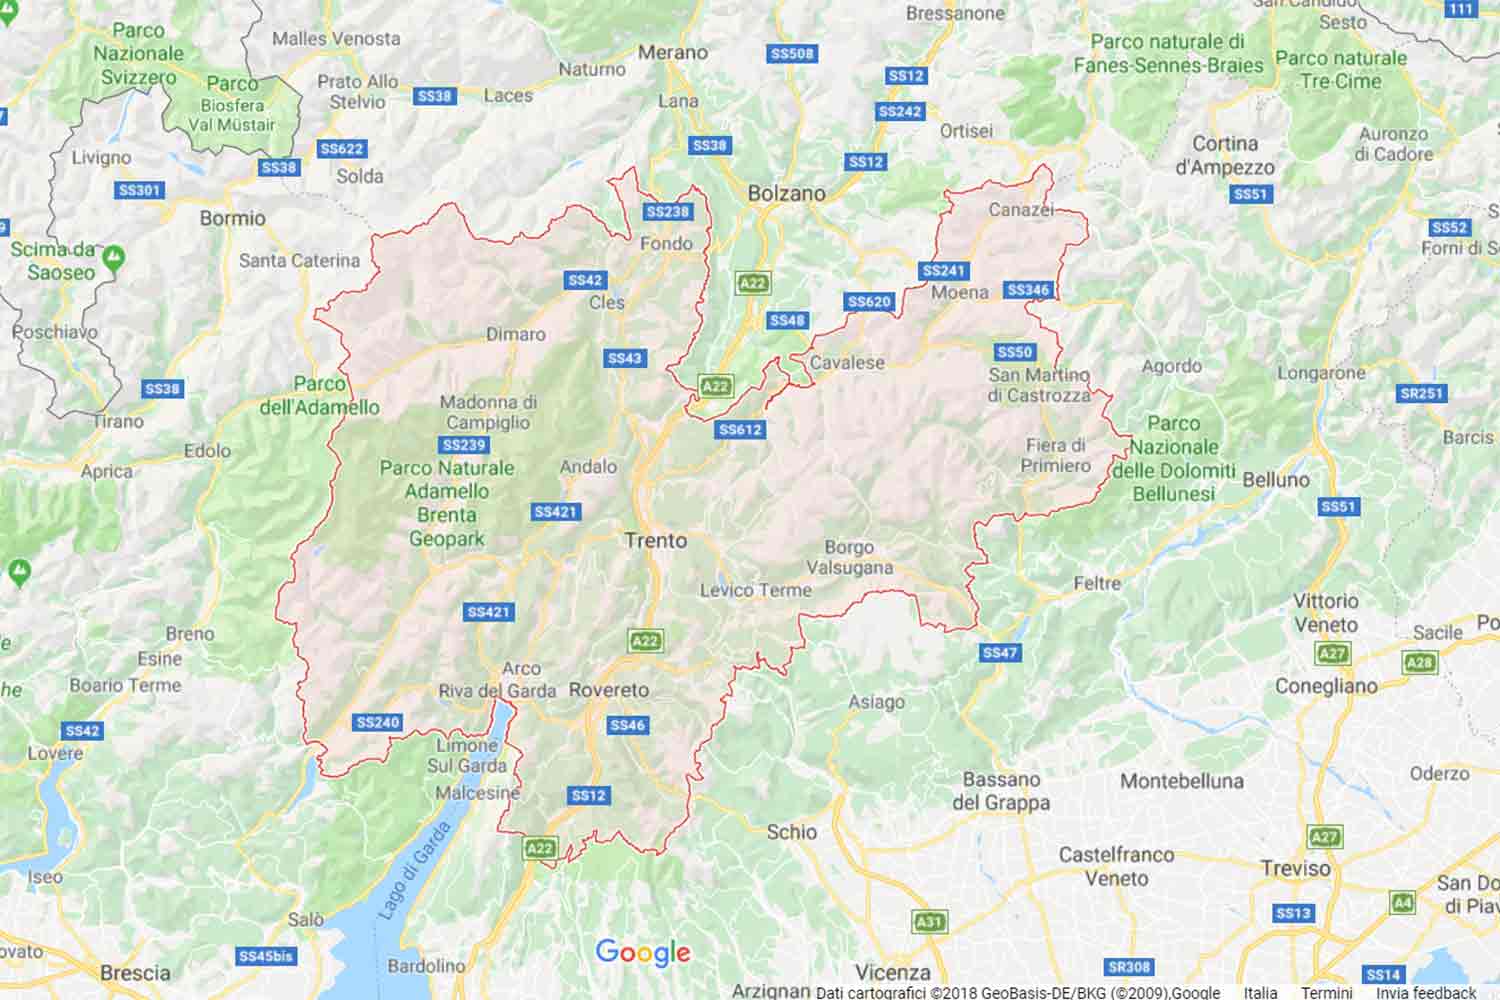 Trentino - Trento - Pieve Tesino Preventivi Veloci google maps